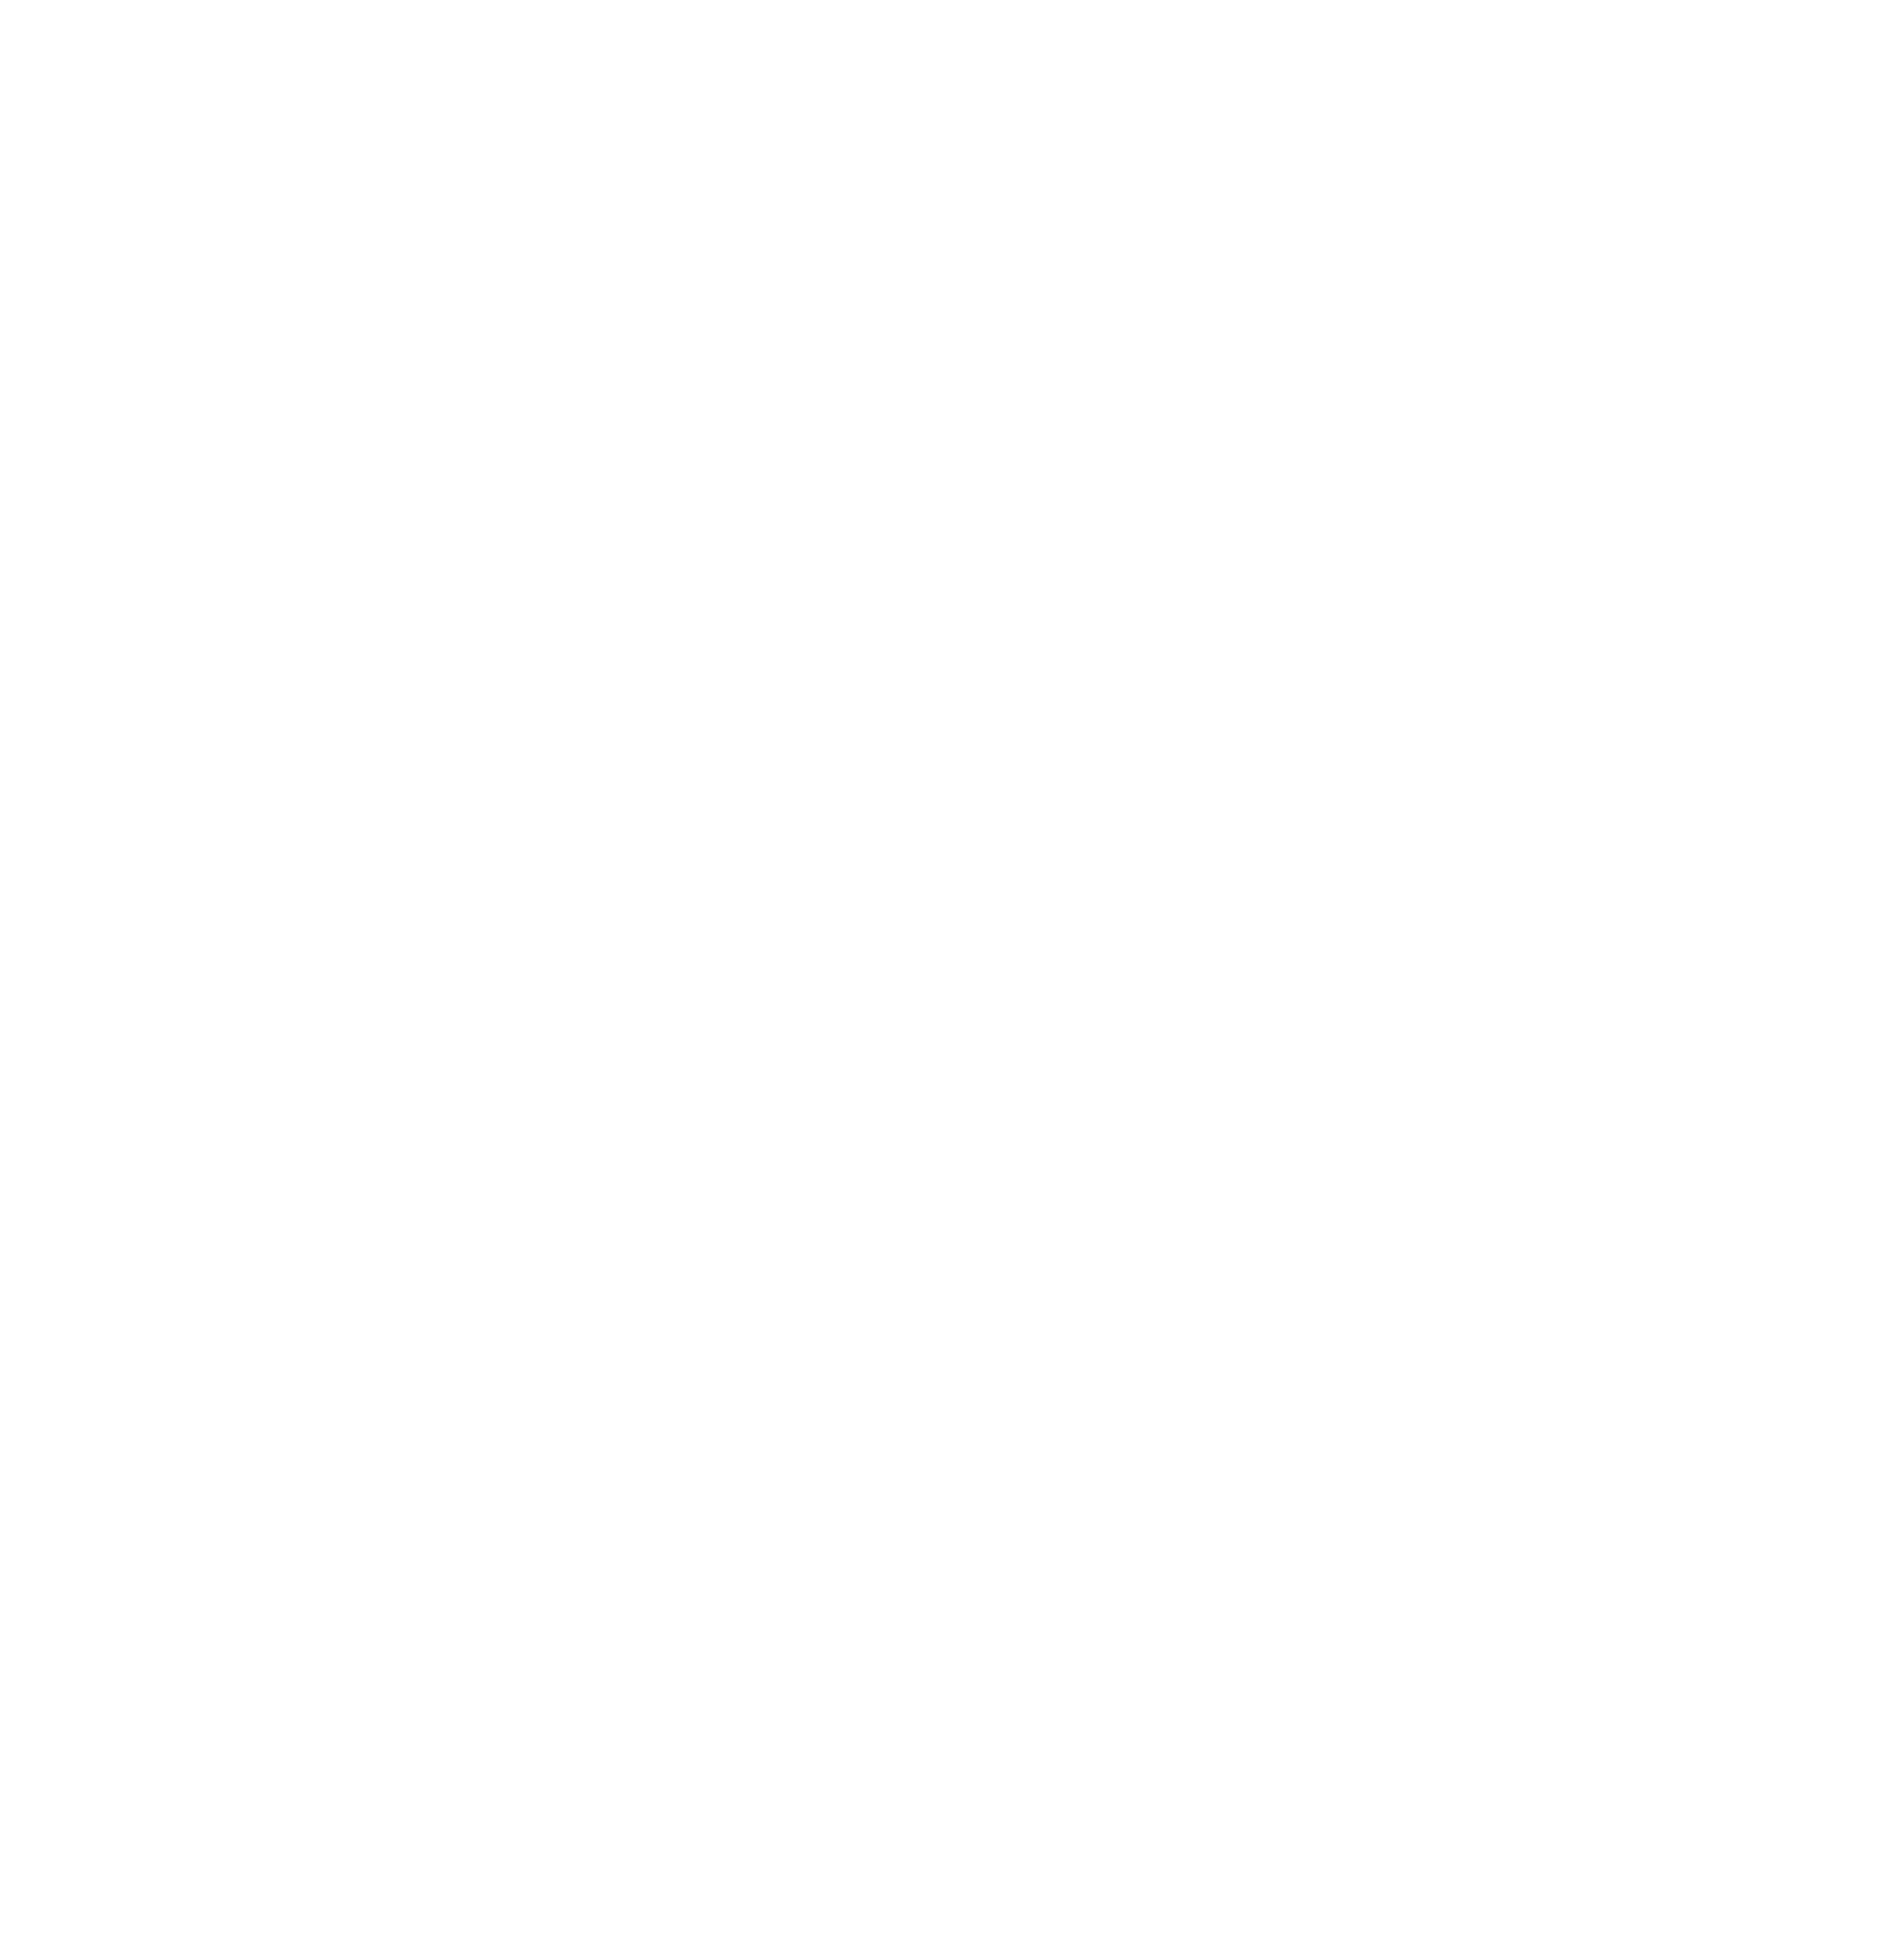 REFU Vielha | Birrería